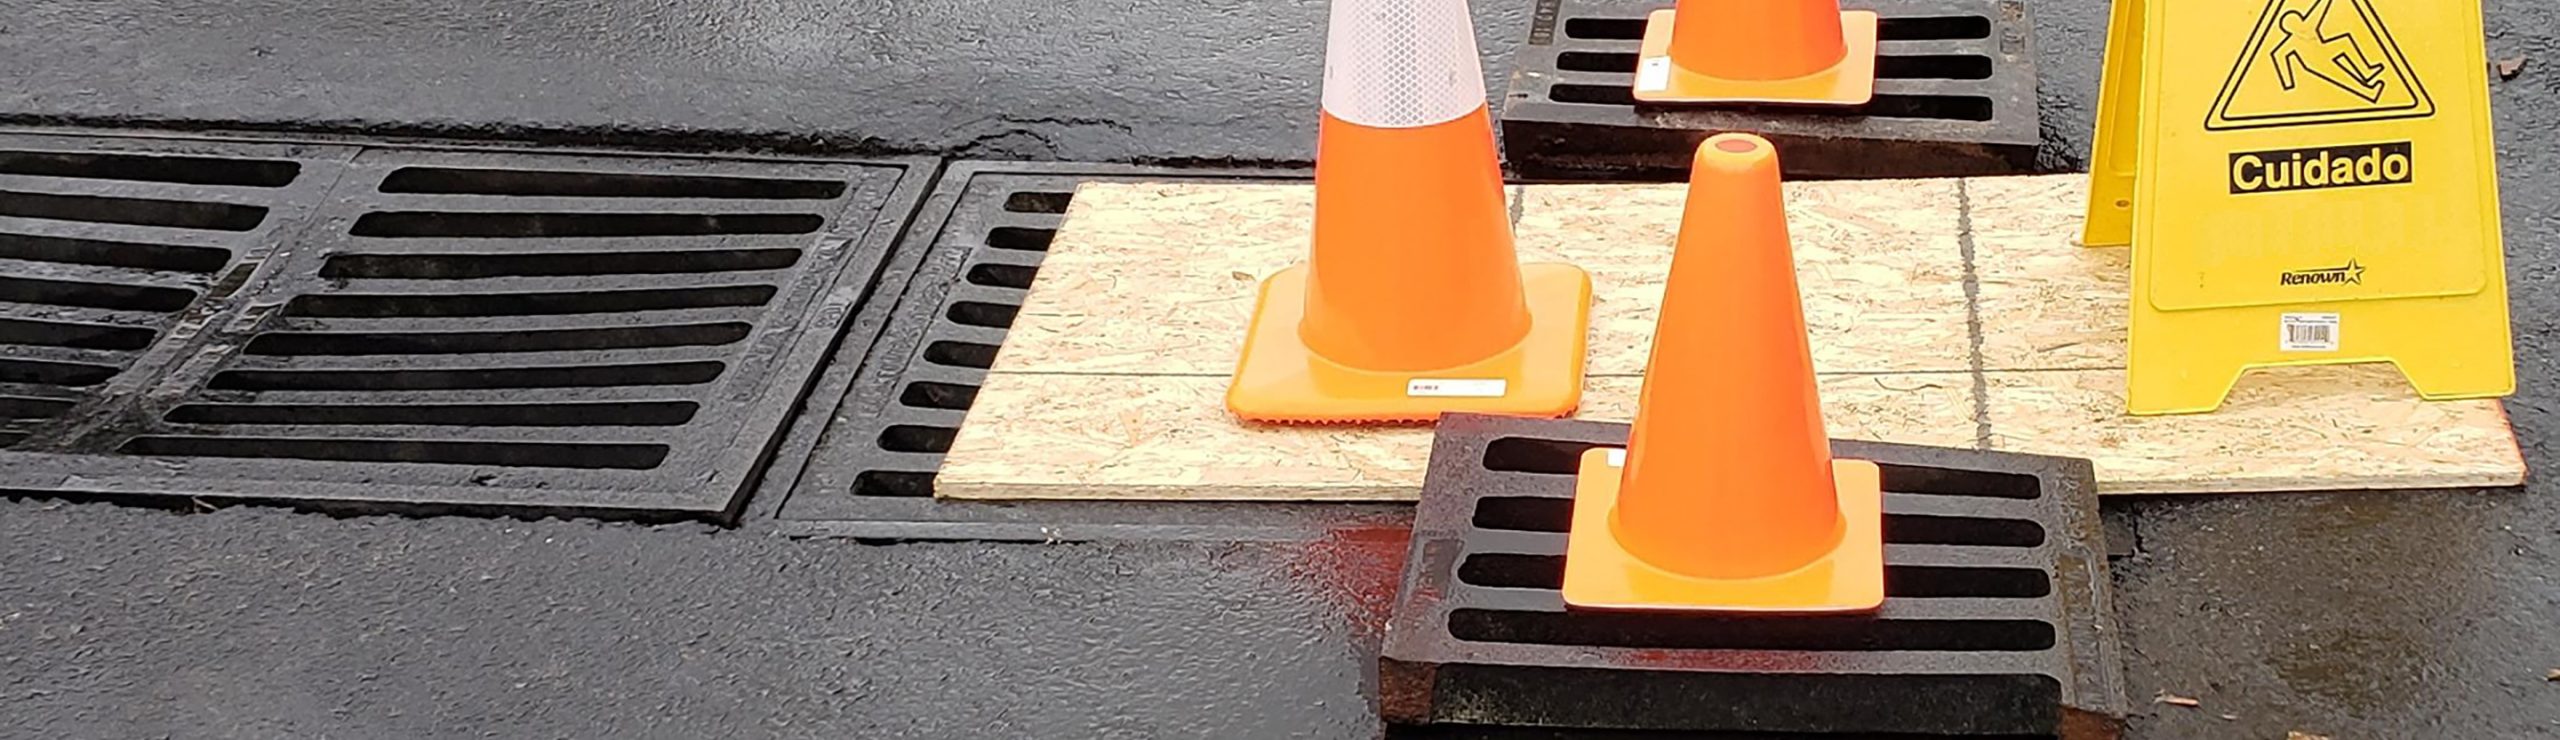 traffic cones on repairs in parking lot